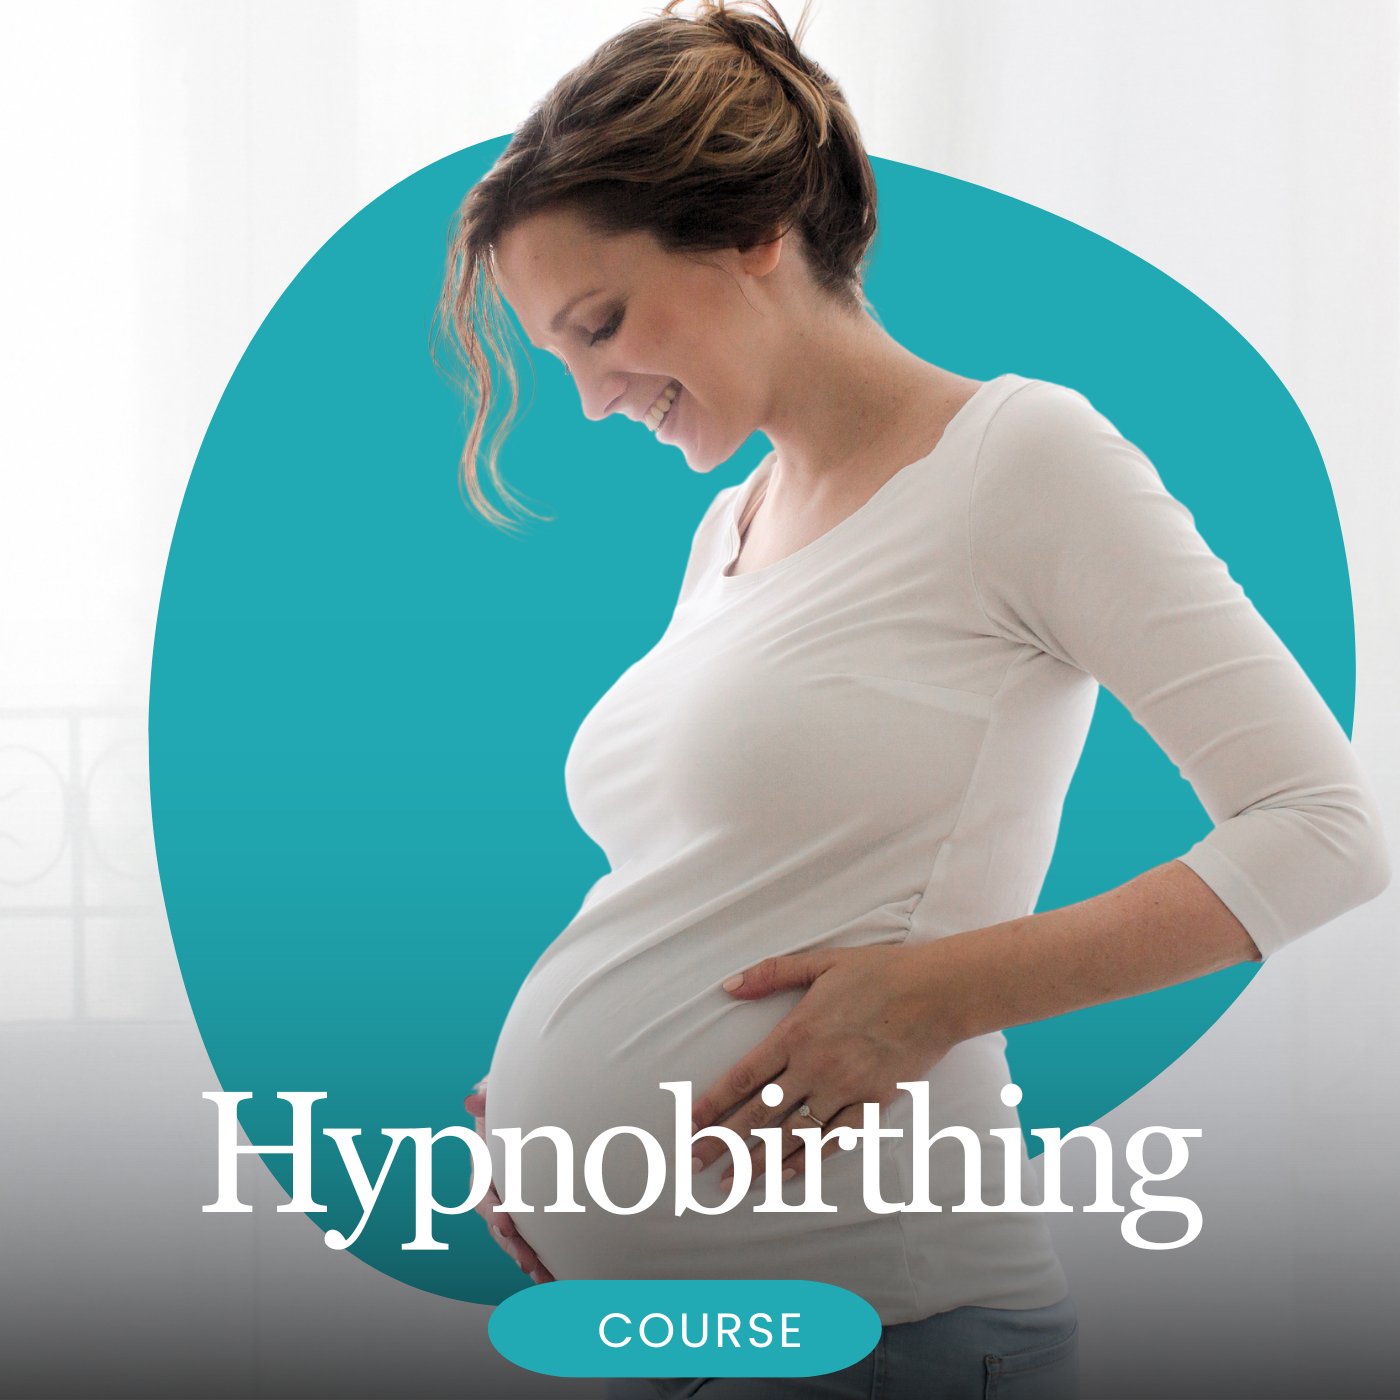 Hypnobirthing Course - Clearmindshypnotherapy